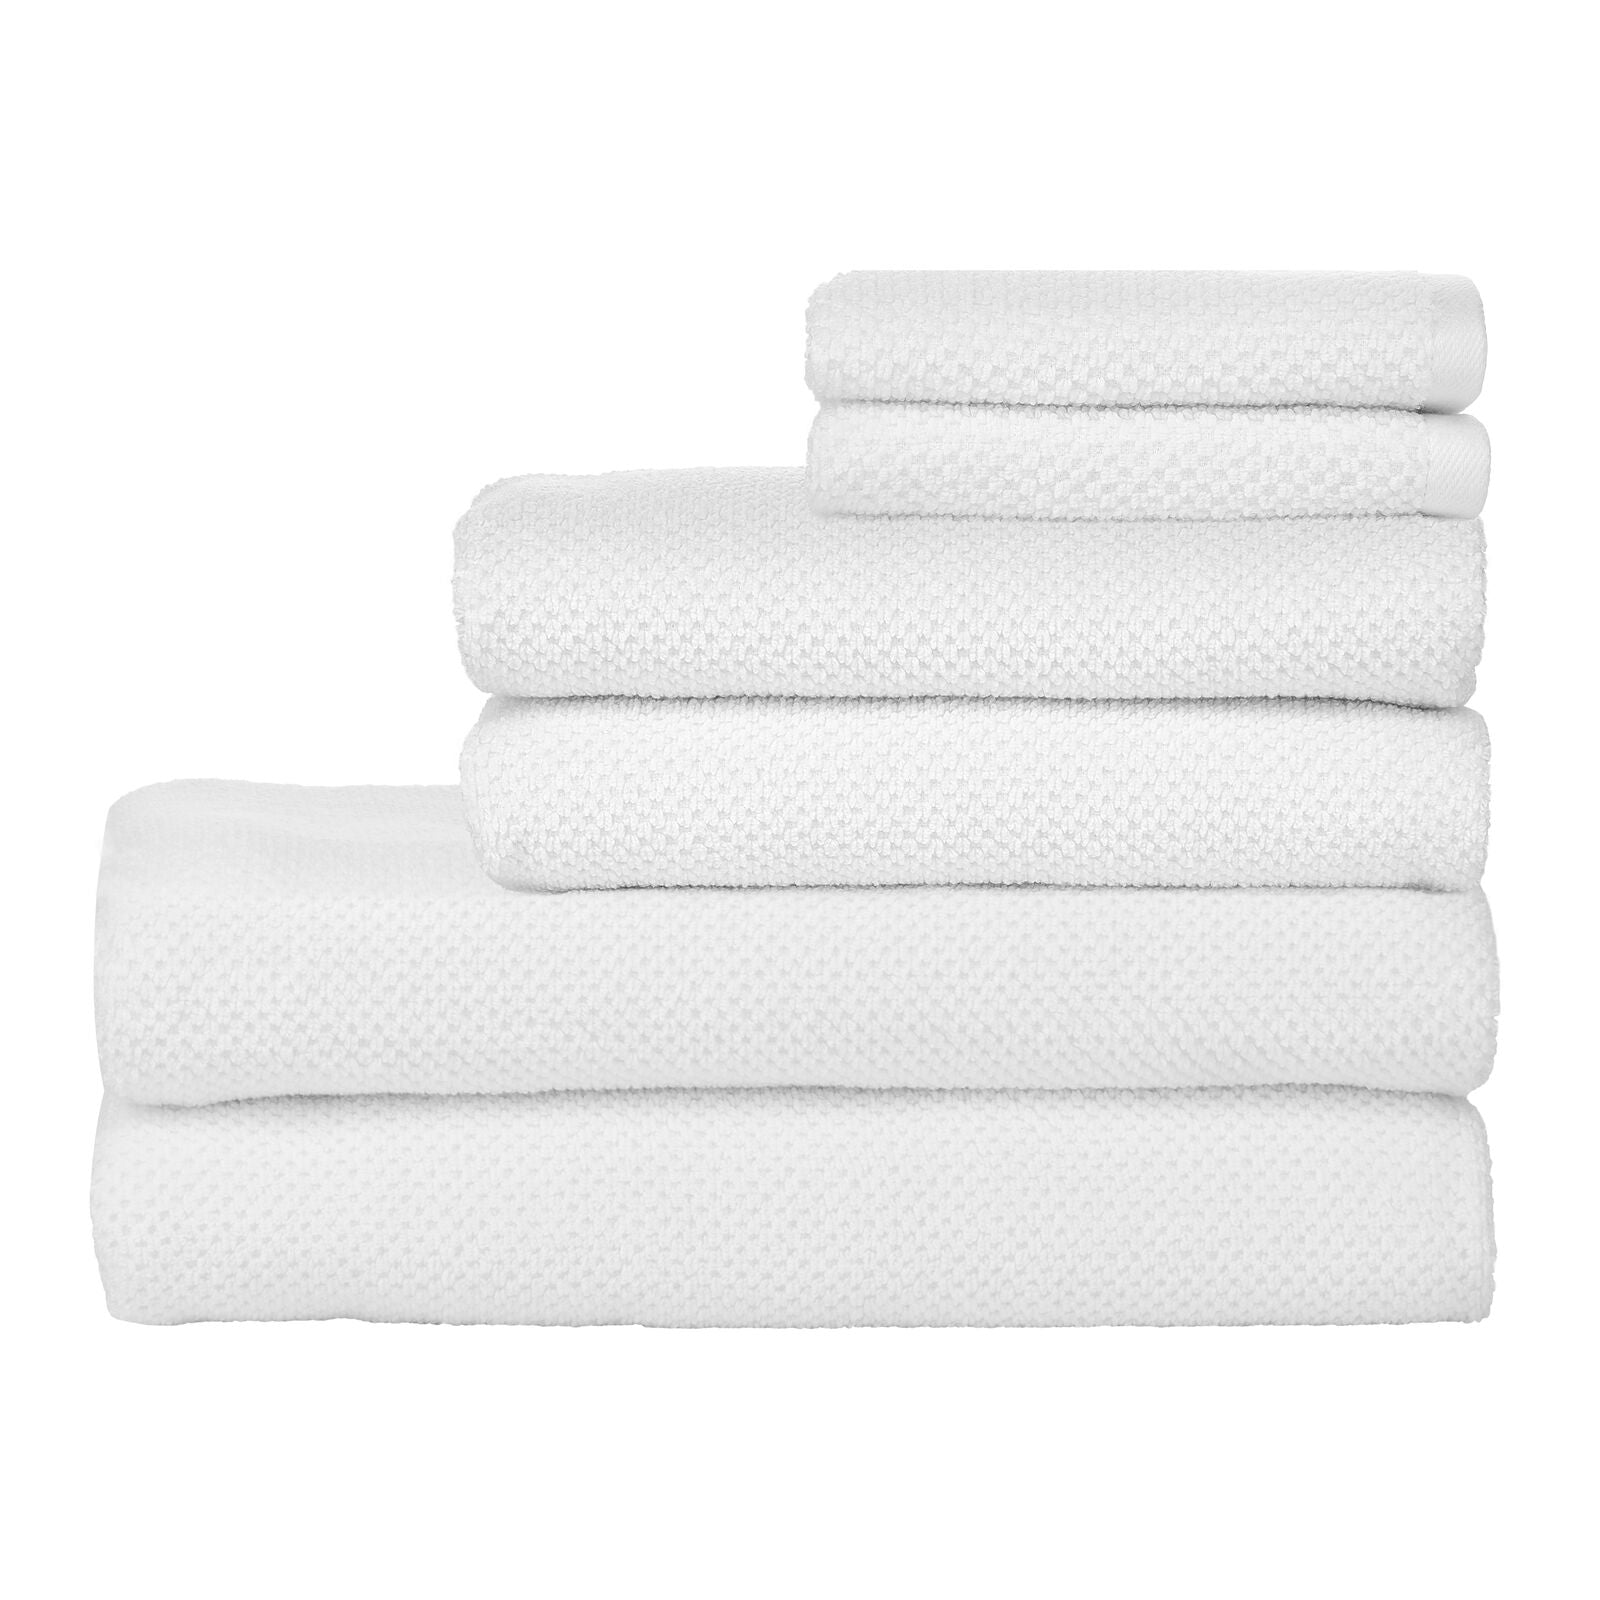 Castle Point AF810002 Combed Cotton Towel Set Rice Weave, 6 Piece - Navy